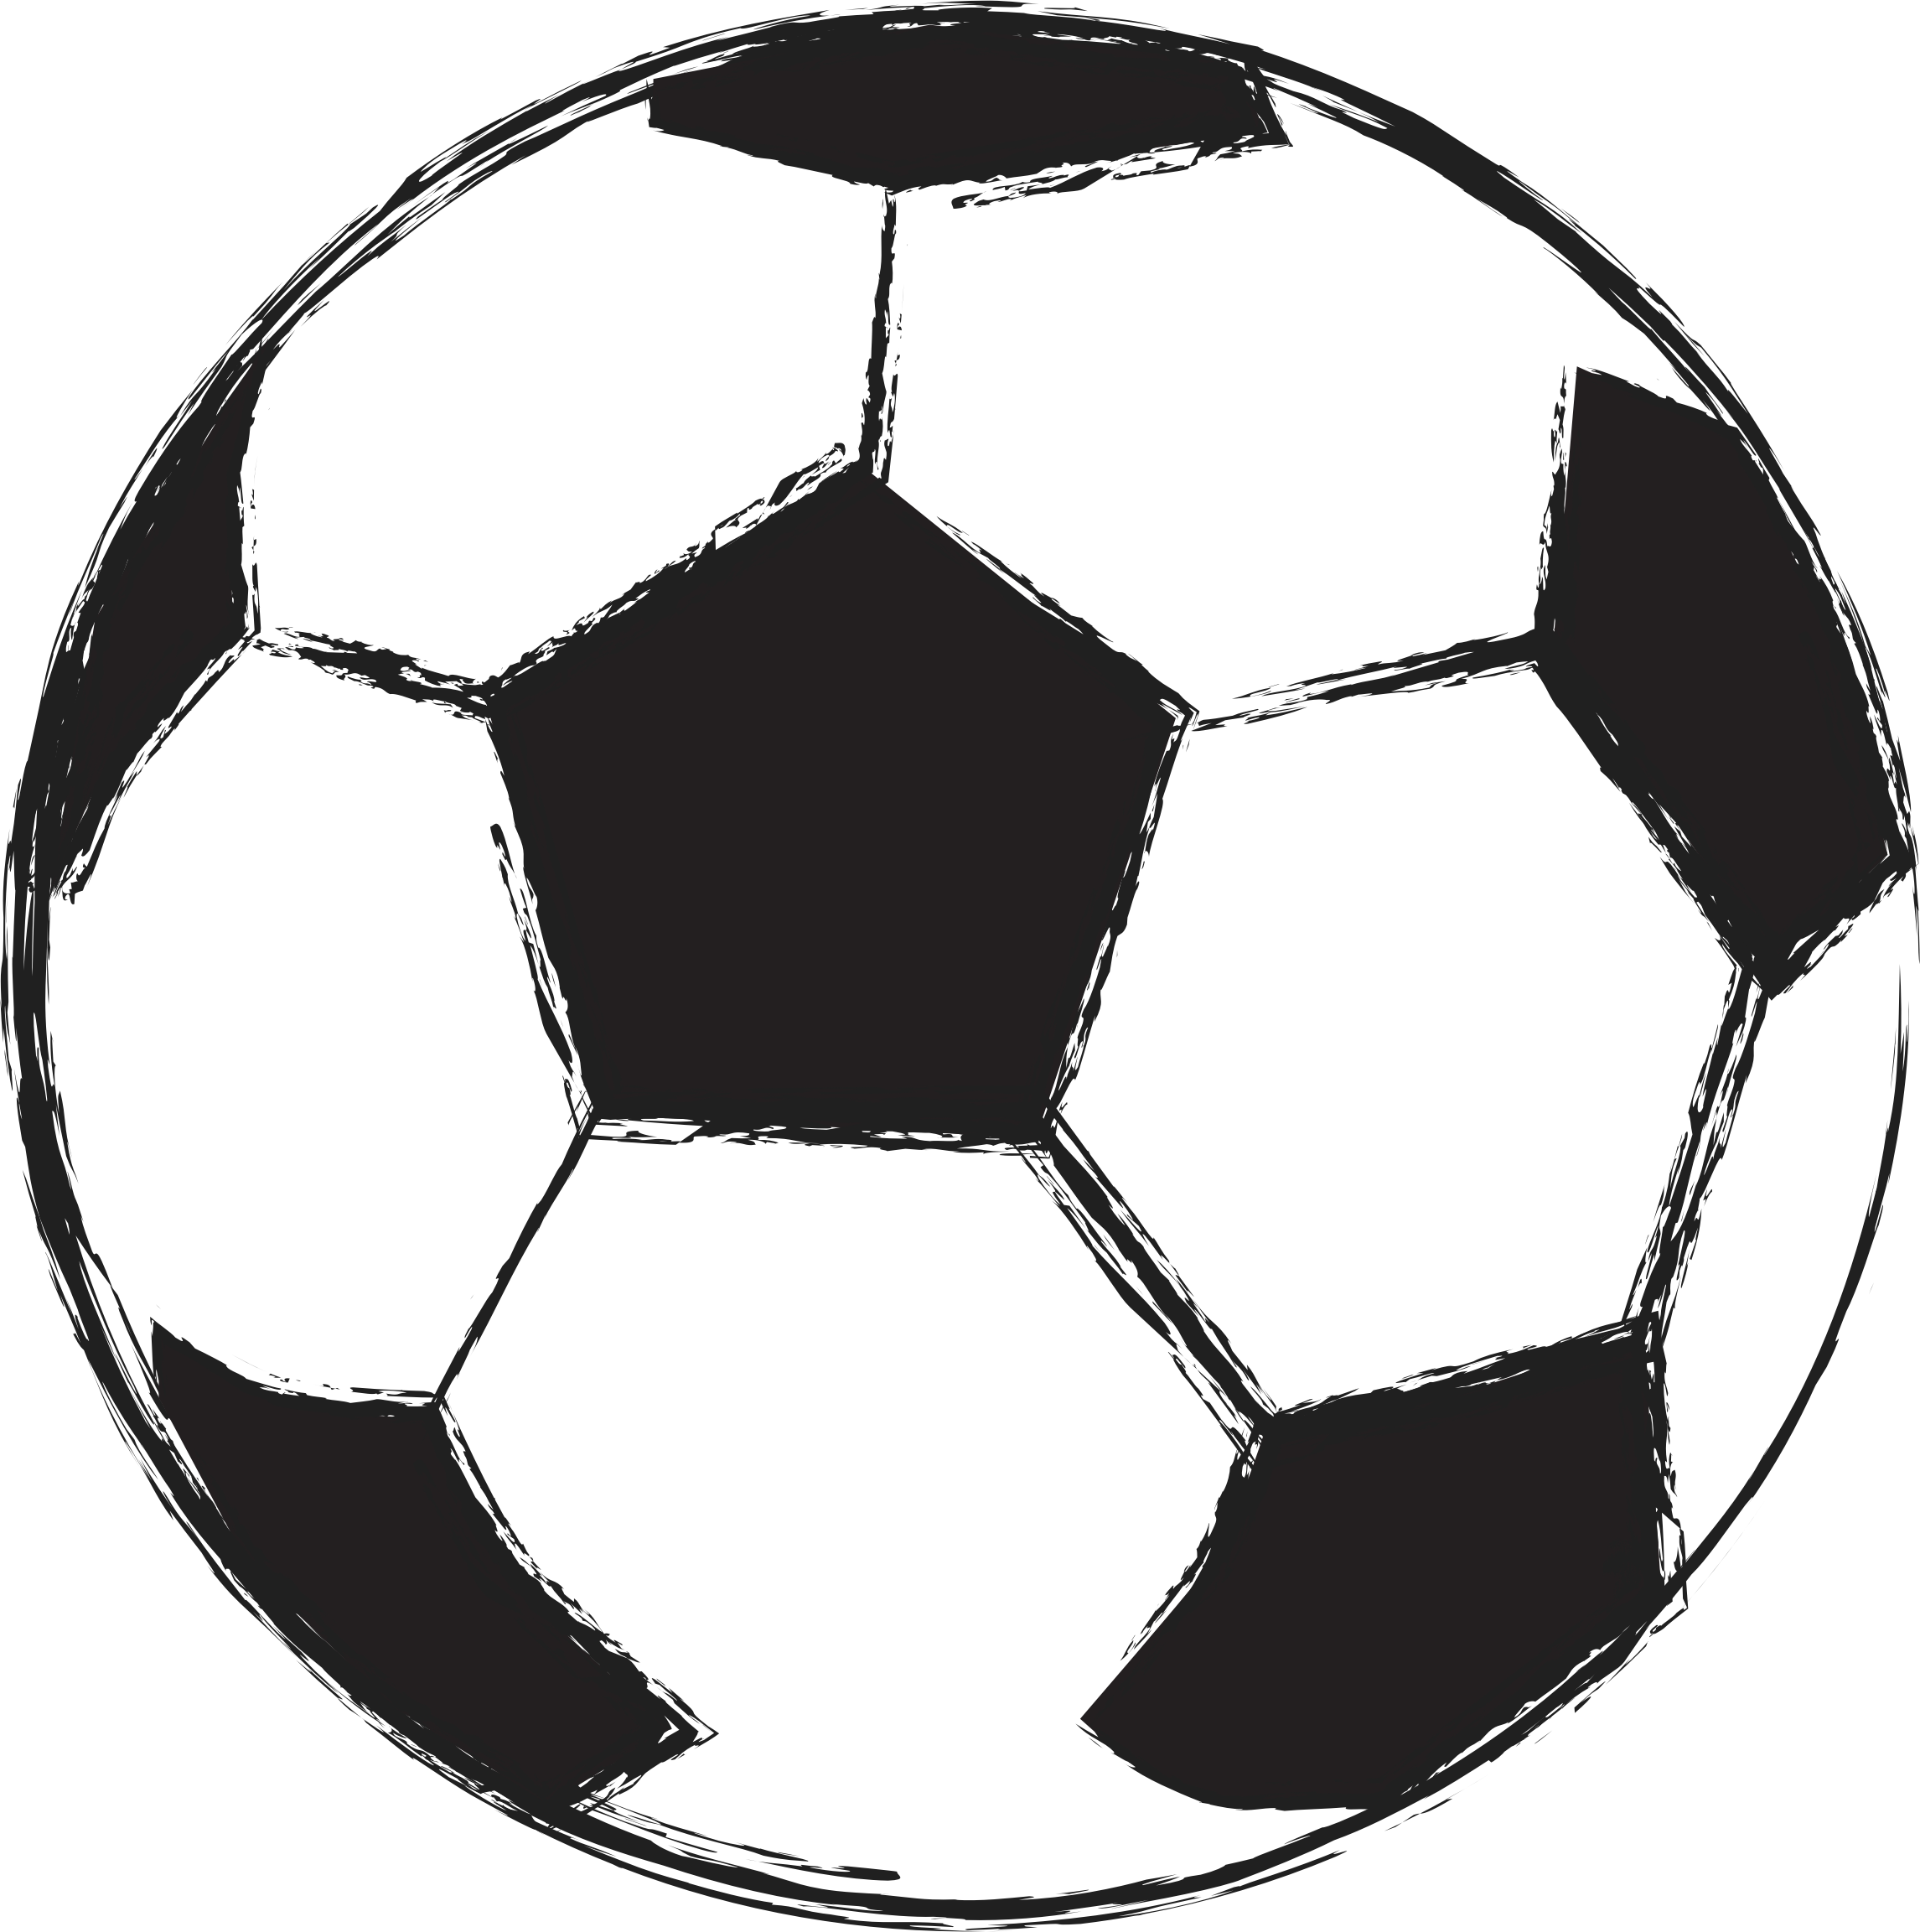 Soccer Ball PNG Image HD